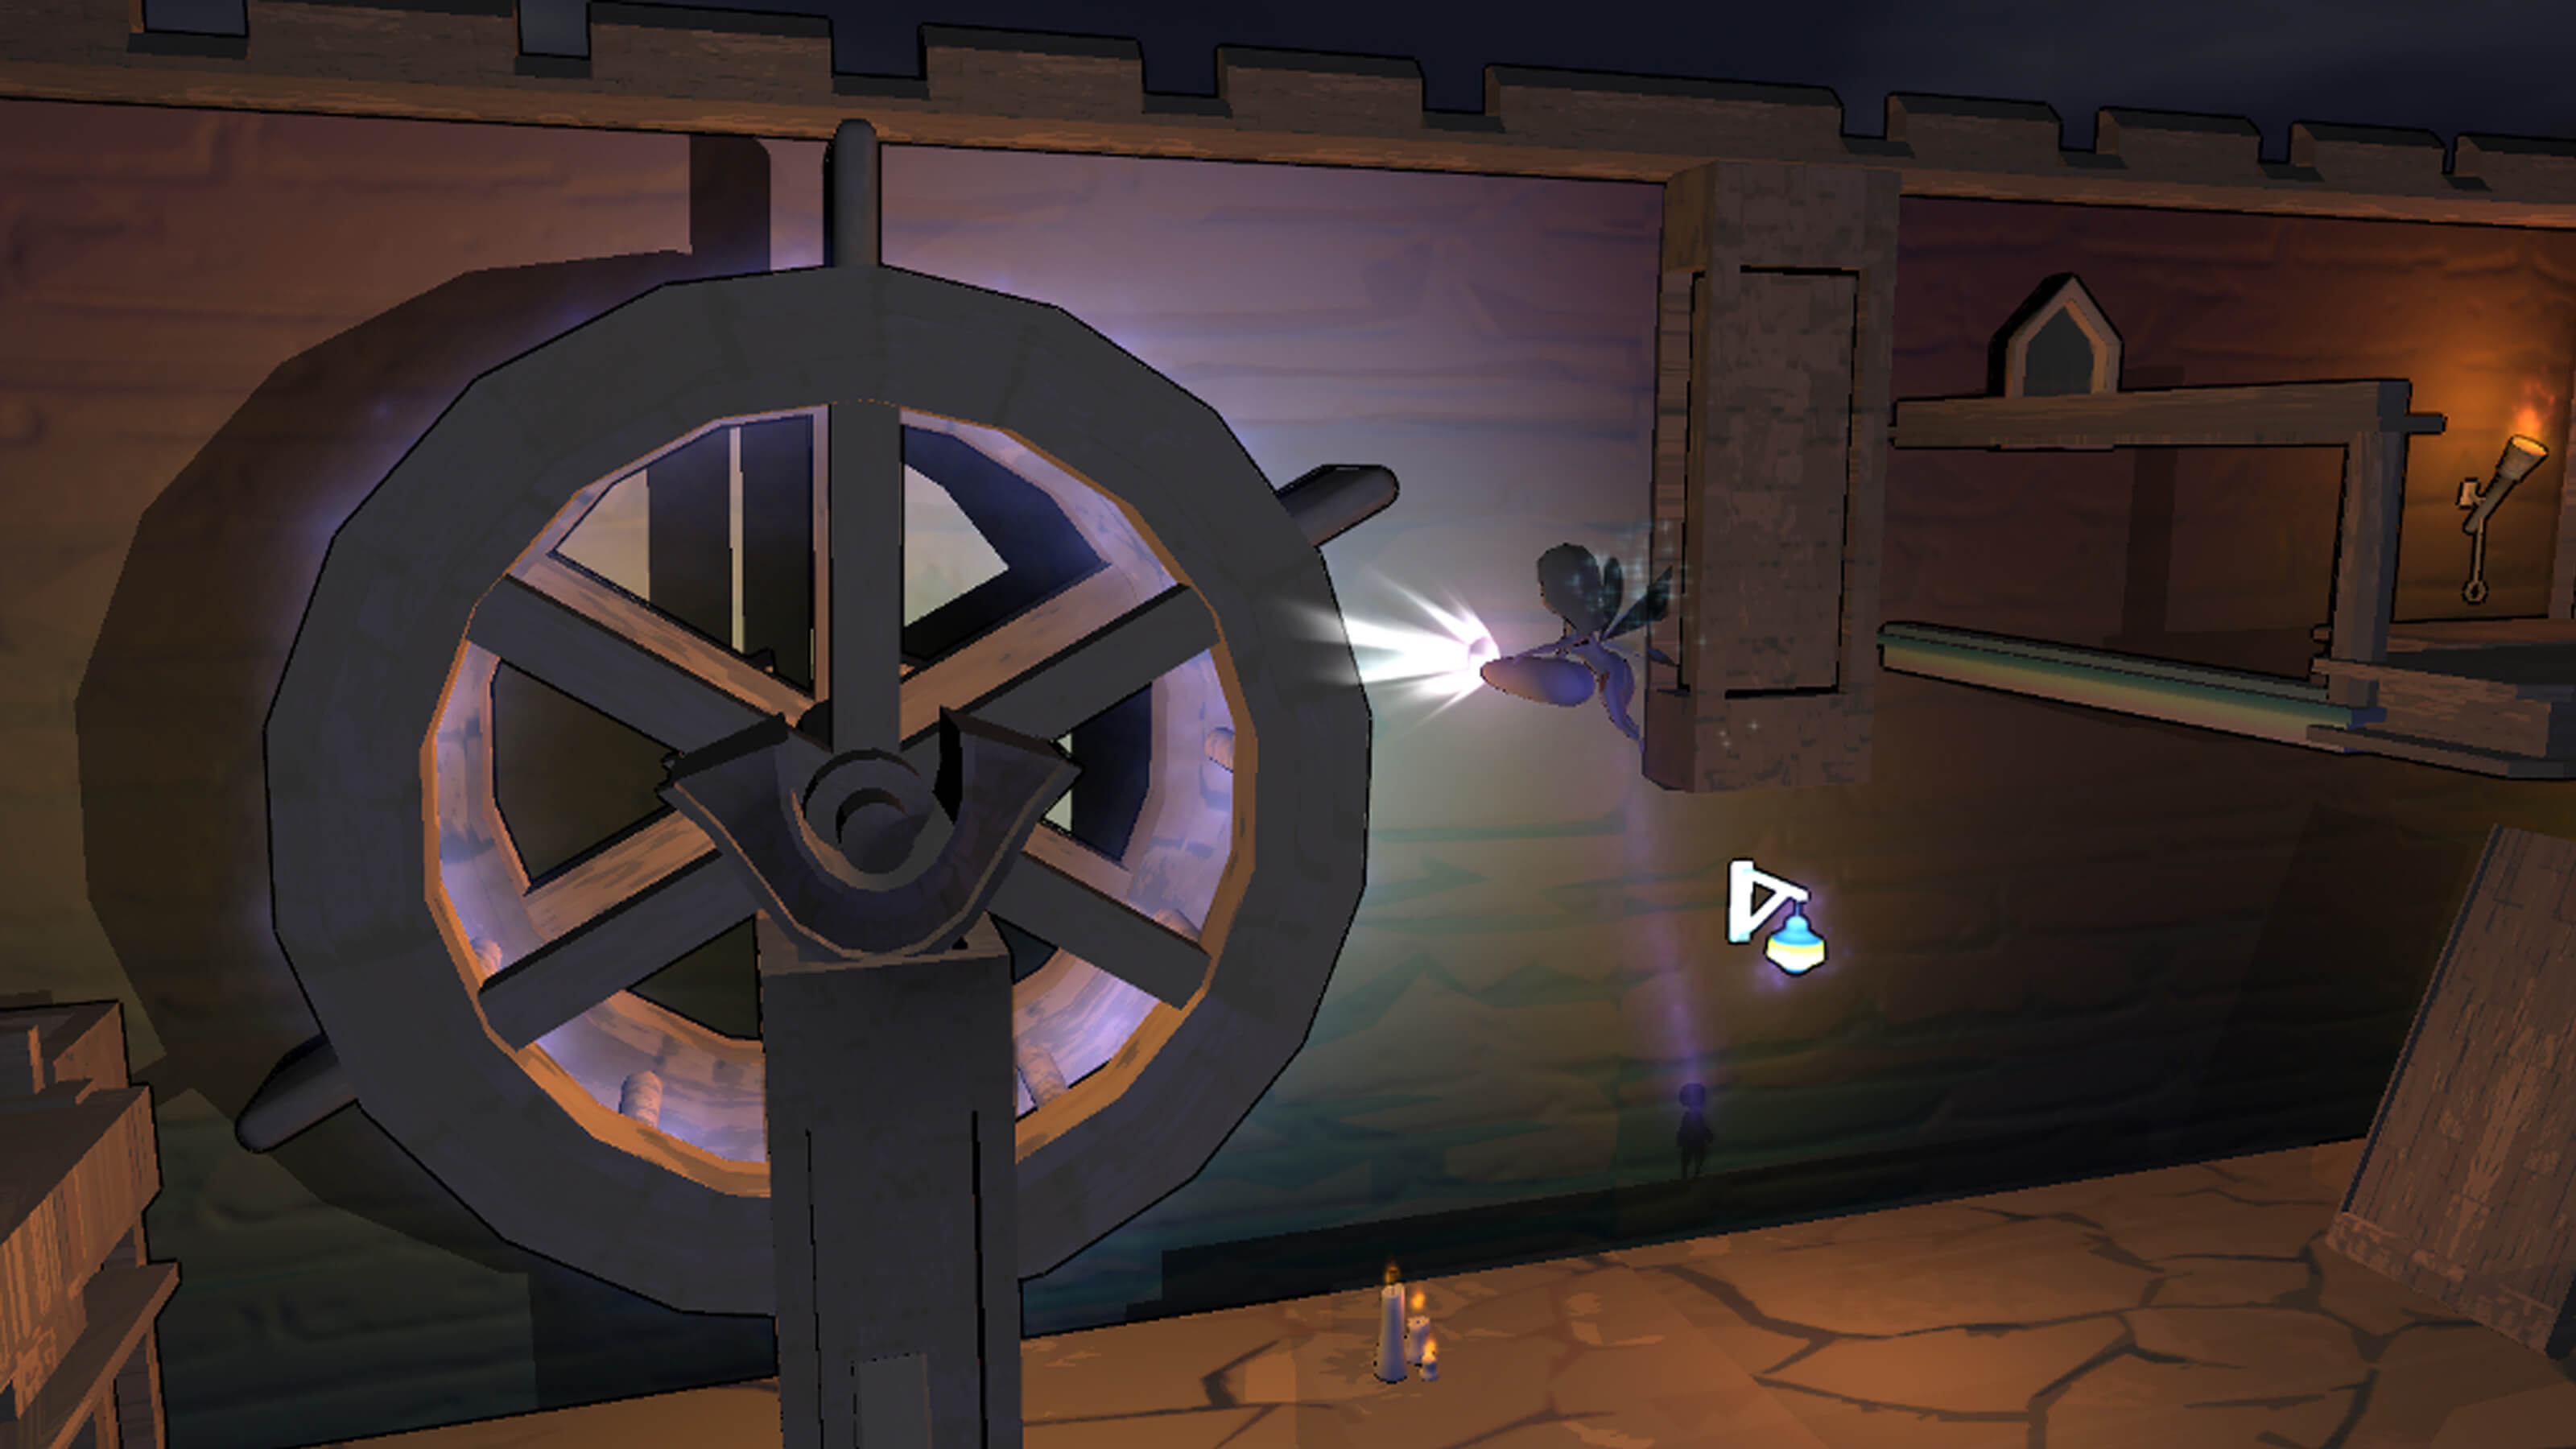 The player's fairy character illuminates a wooden waterwheel